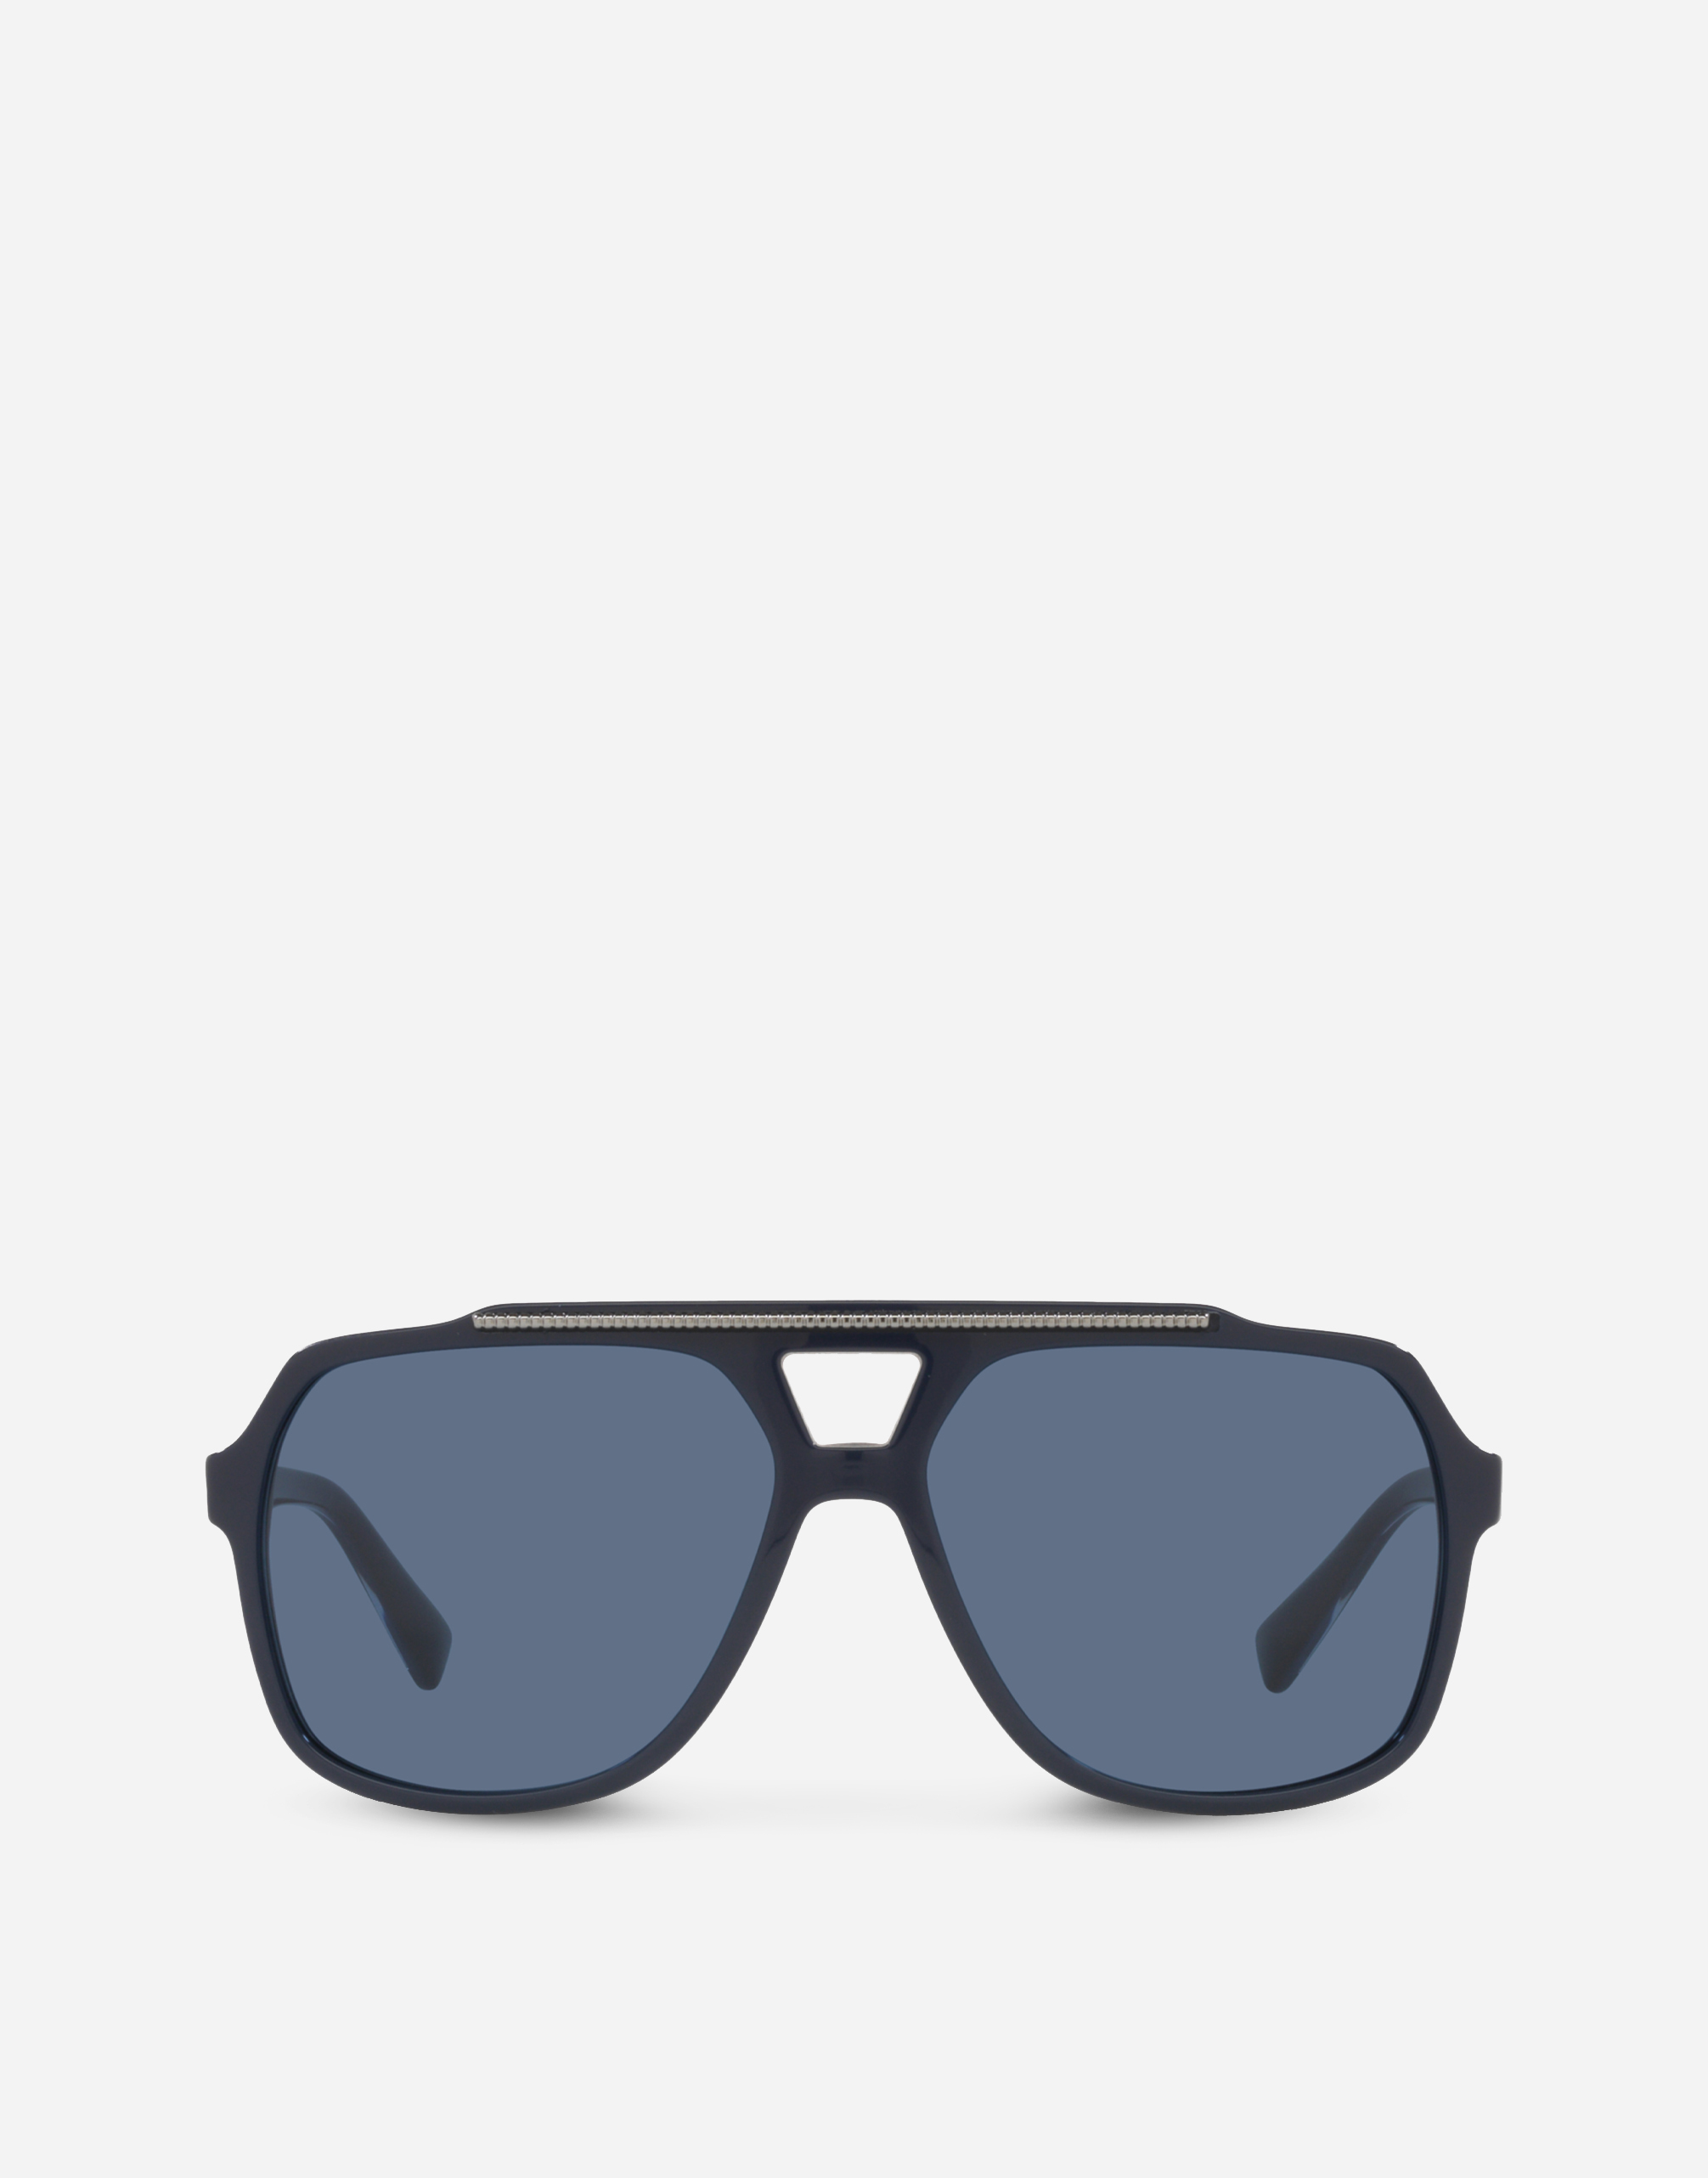 Gros grain sunglasses in Shiny blue